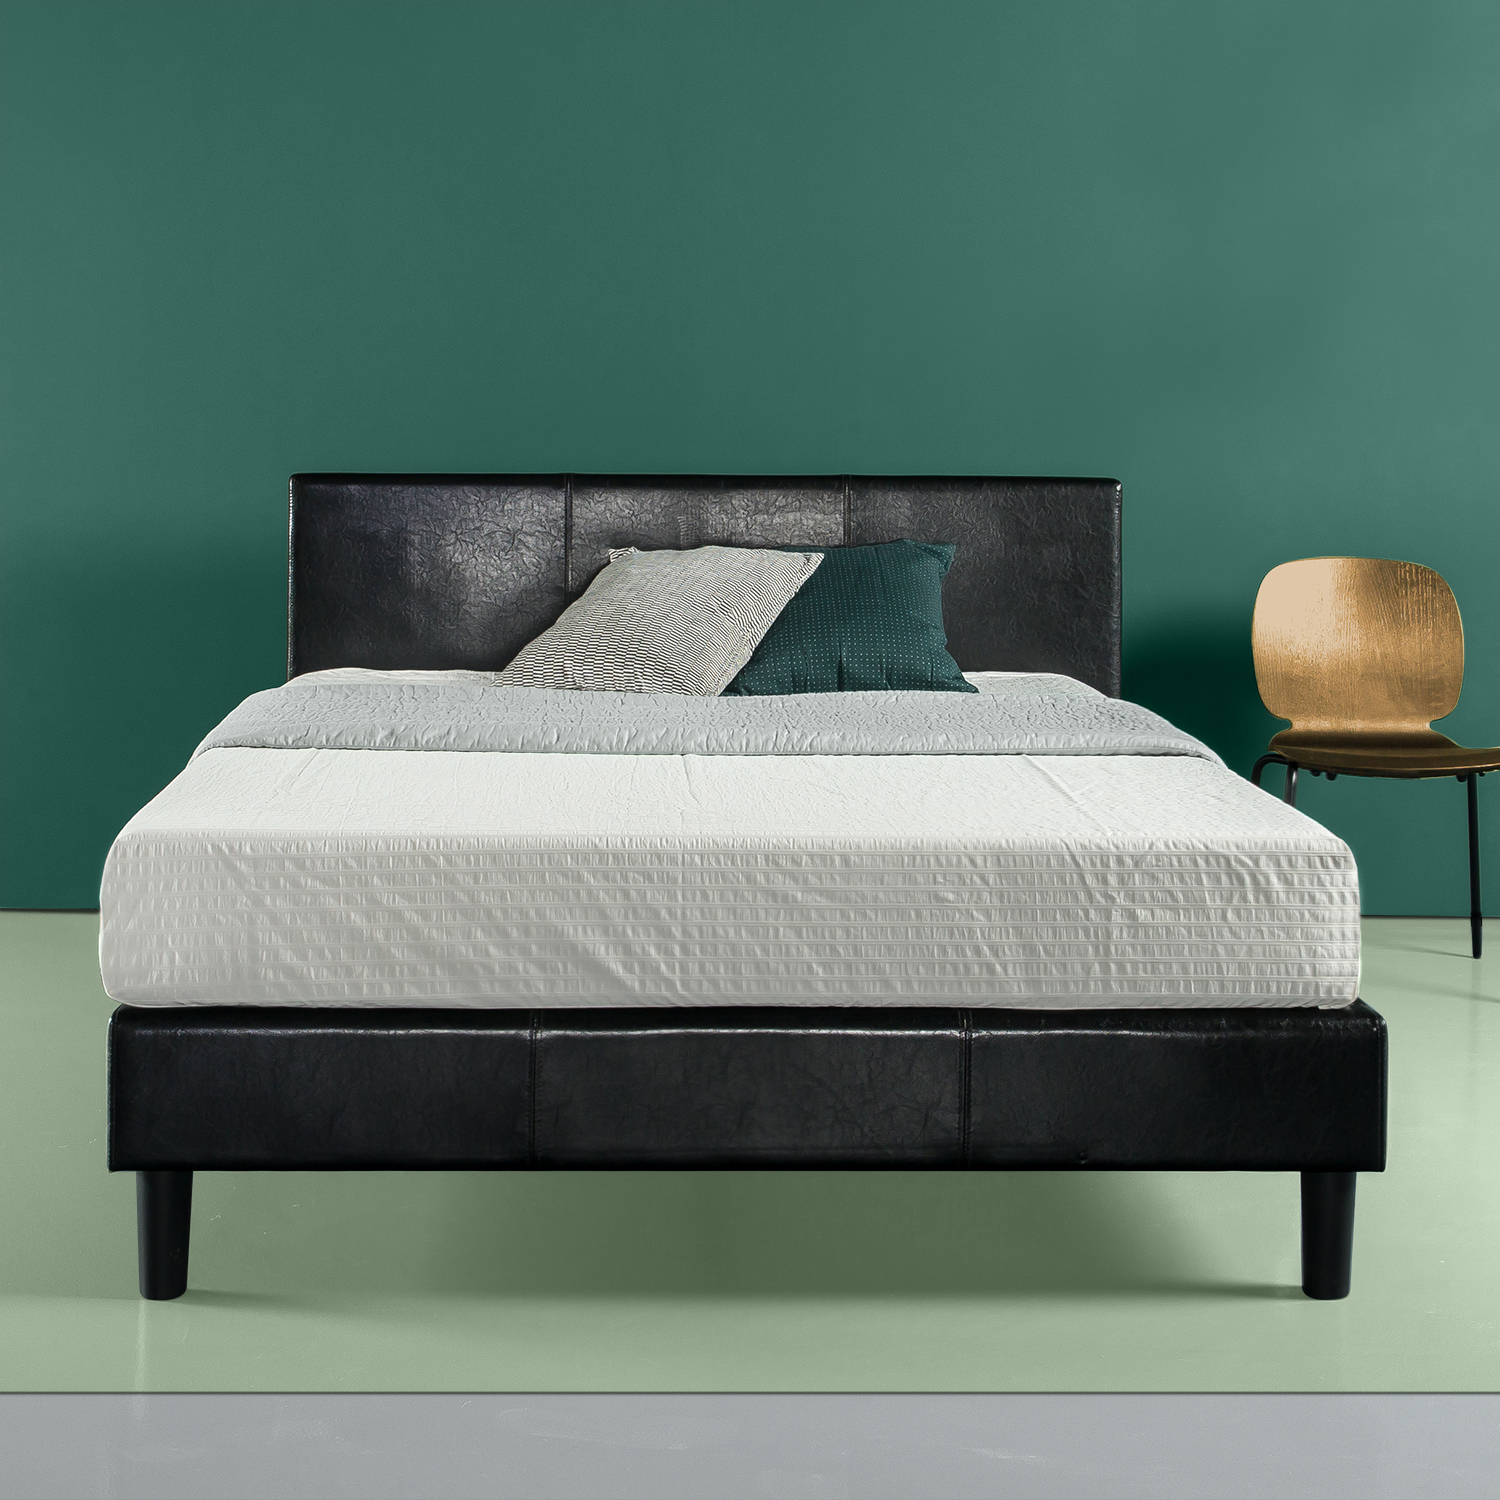 Zinus Jade KING Faux Leather Upholstered Platform Bed with Wooden Slats